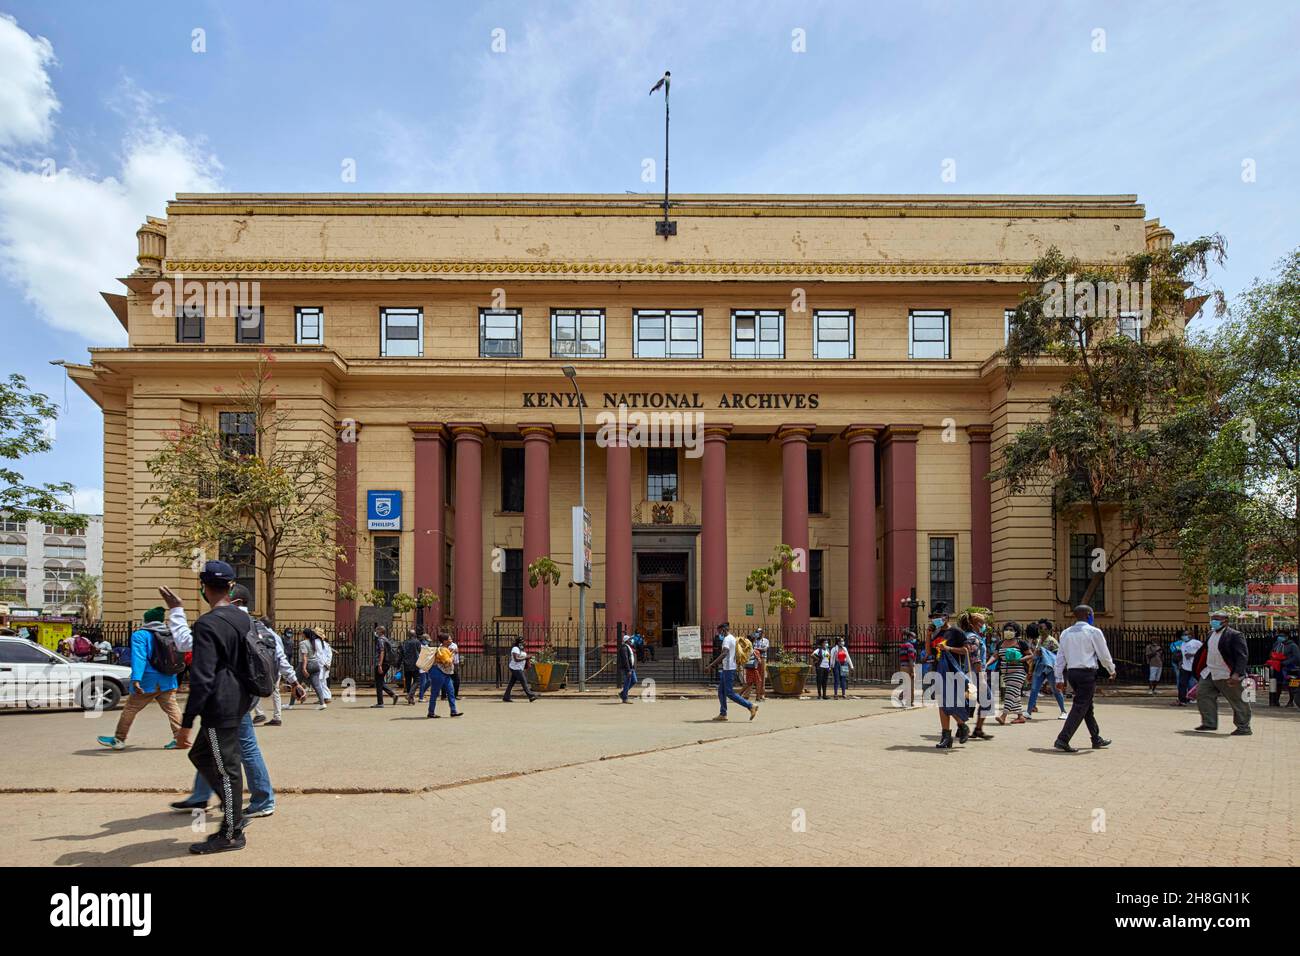 Kenya National Archives in Nairobi Kenya Africa Stock Photo